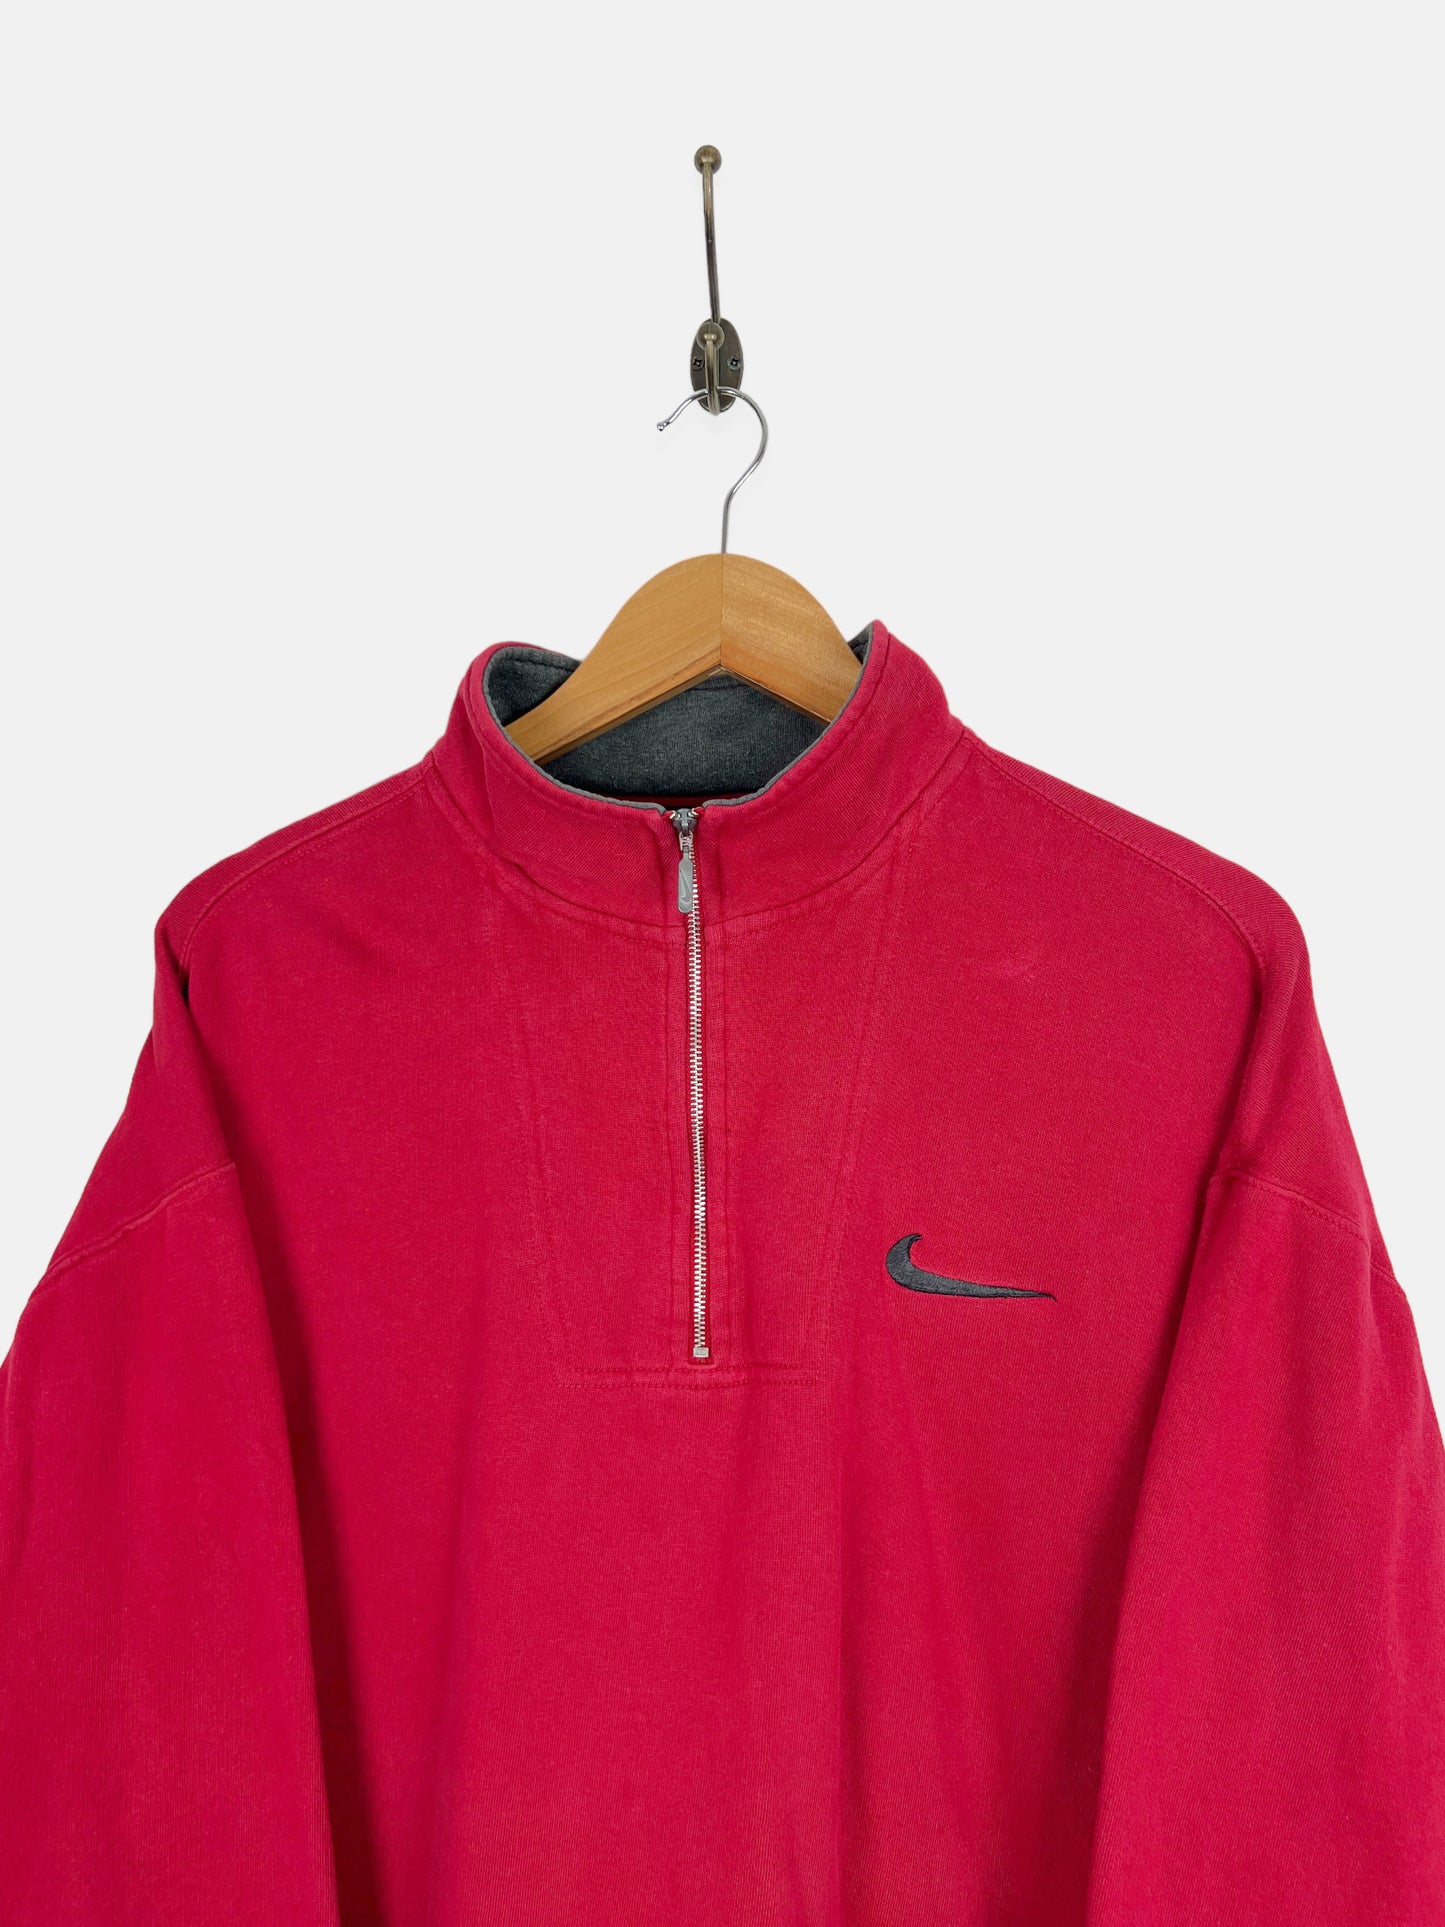 90's Nike Embroidered Vintage Quarterzip Sweatshirt Size 16-18